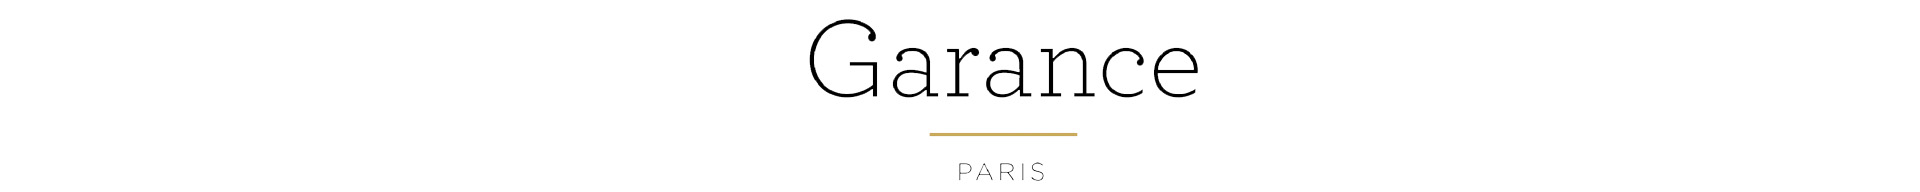 GARANCE PARIS